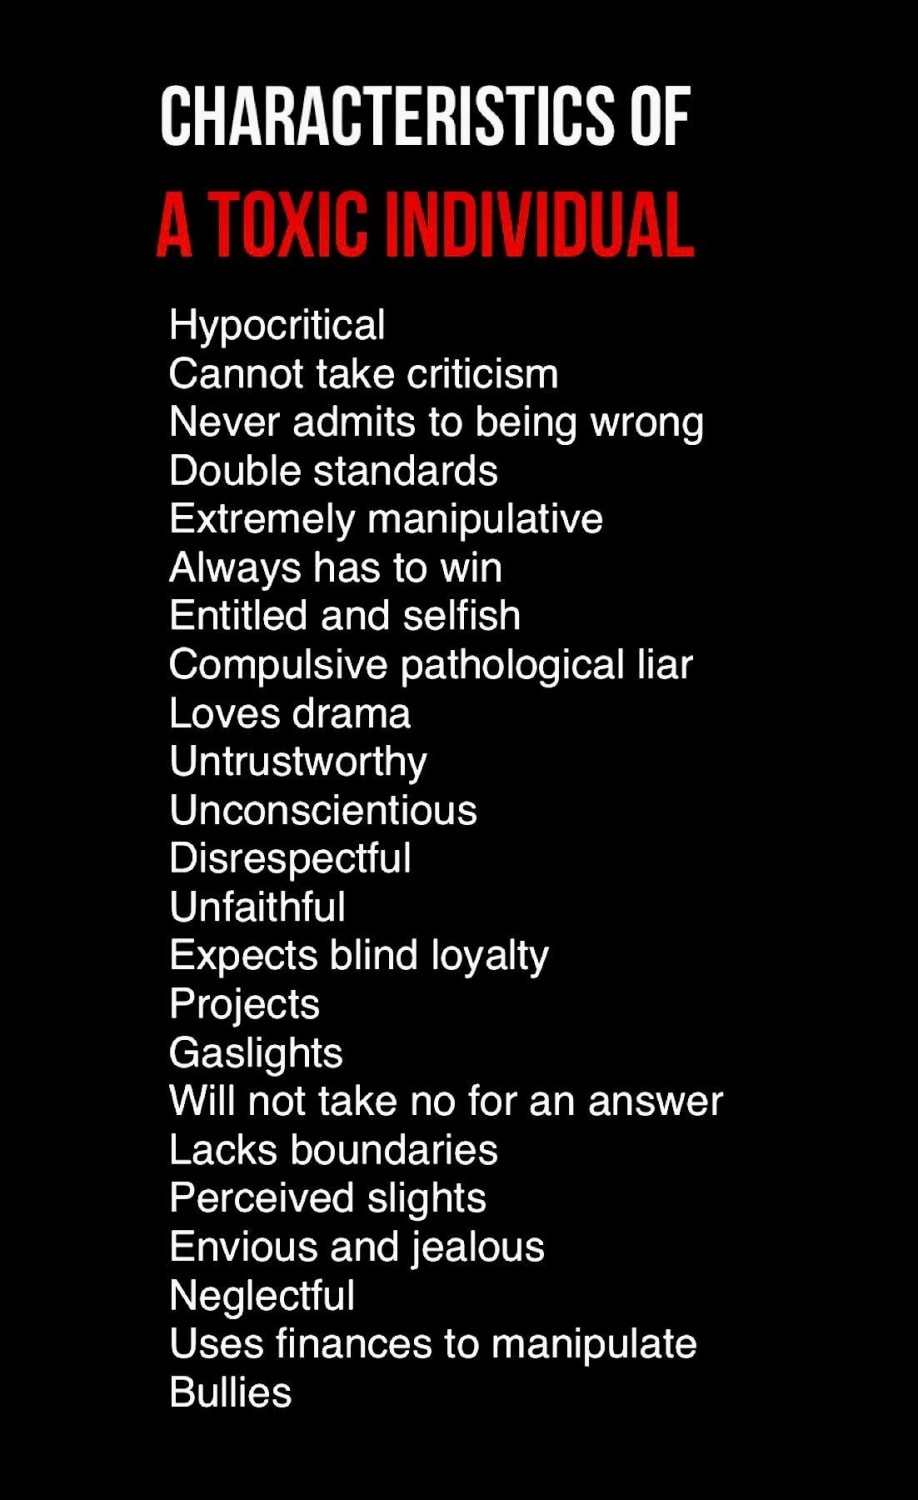 Characteristics of a Toxic Individual